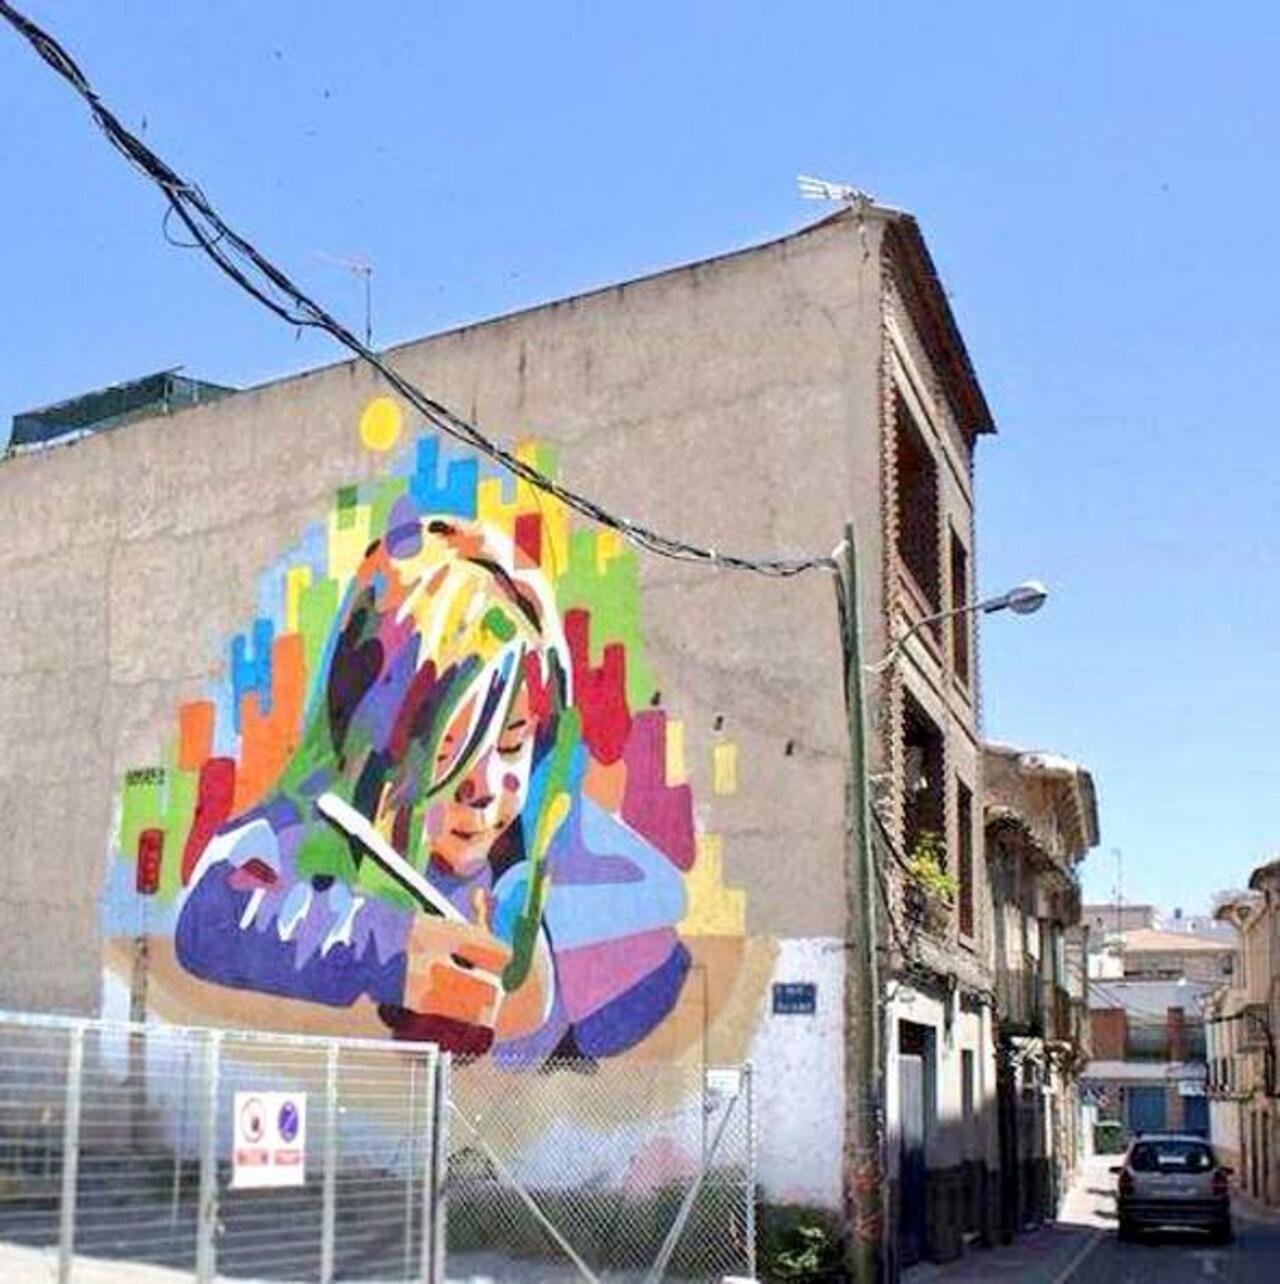 “@Pitchuskita: Street Art by Sendra 
Murcia, Spain

#streetart #art #graffiti #mural http://t.co/lWQ4Qo0pNf” absolutely beautiful!